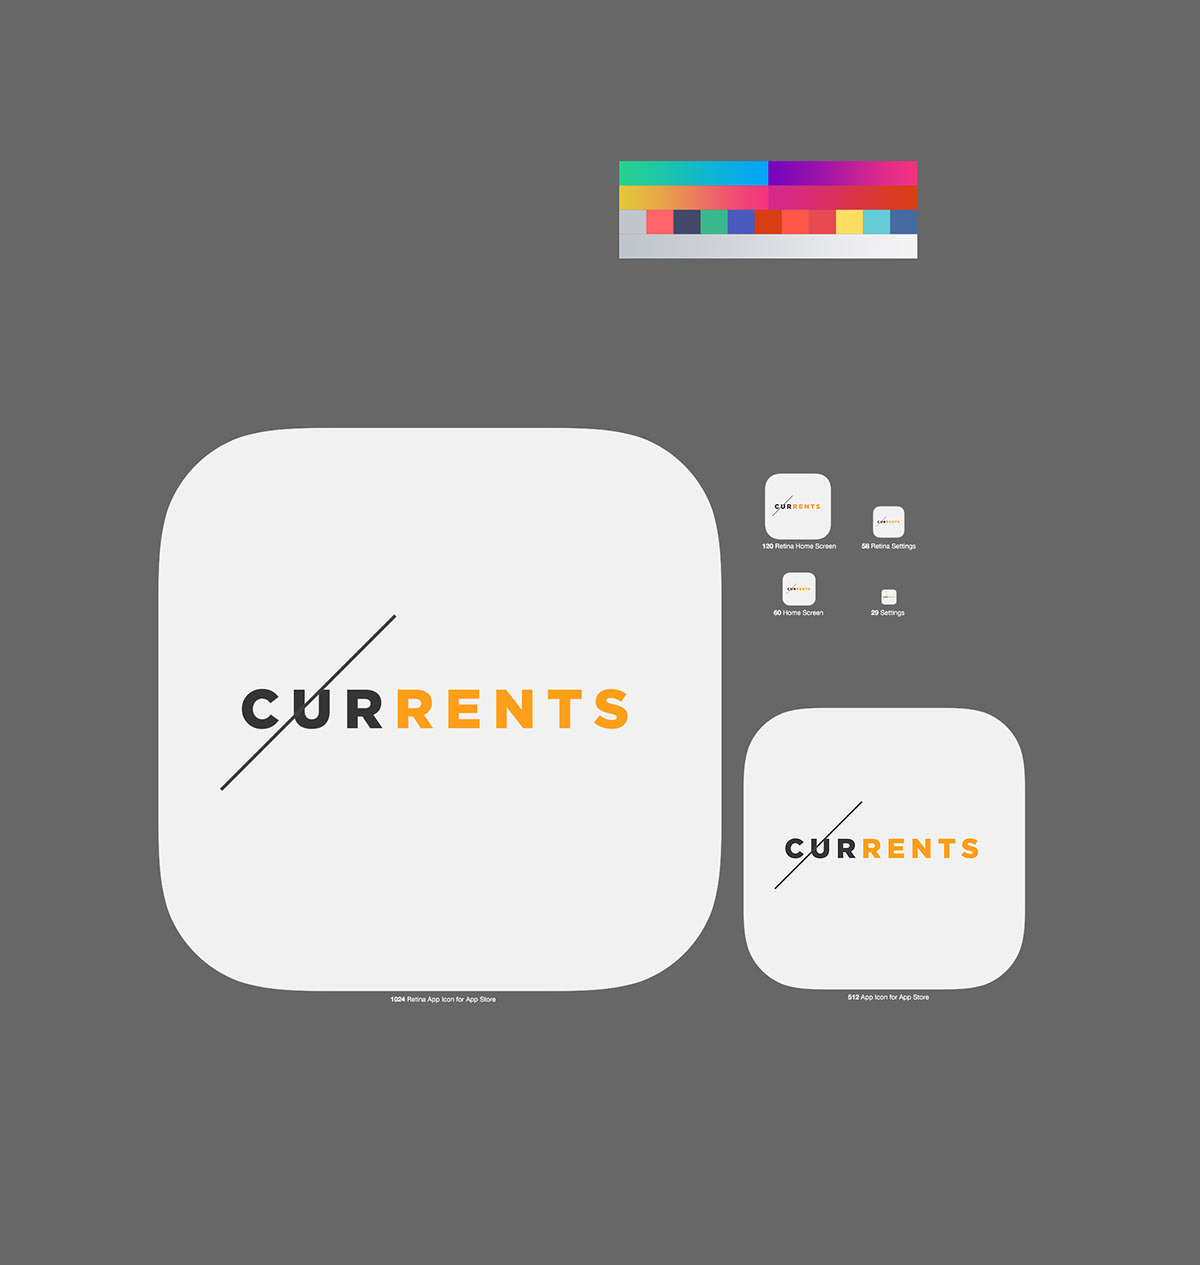 Currents social networking app